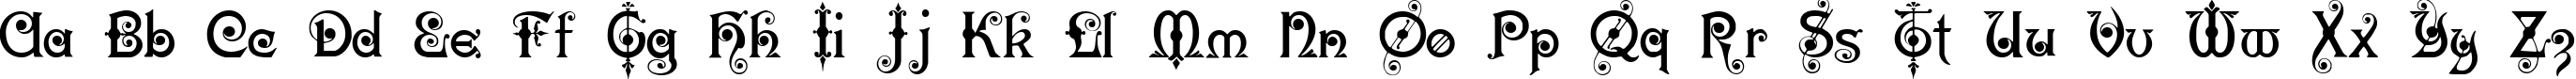 Пример написания английского алфавита шрифтом Karnac Two